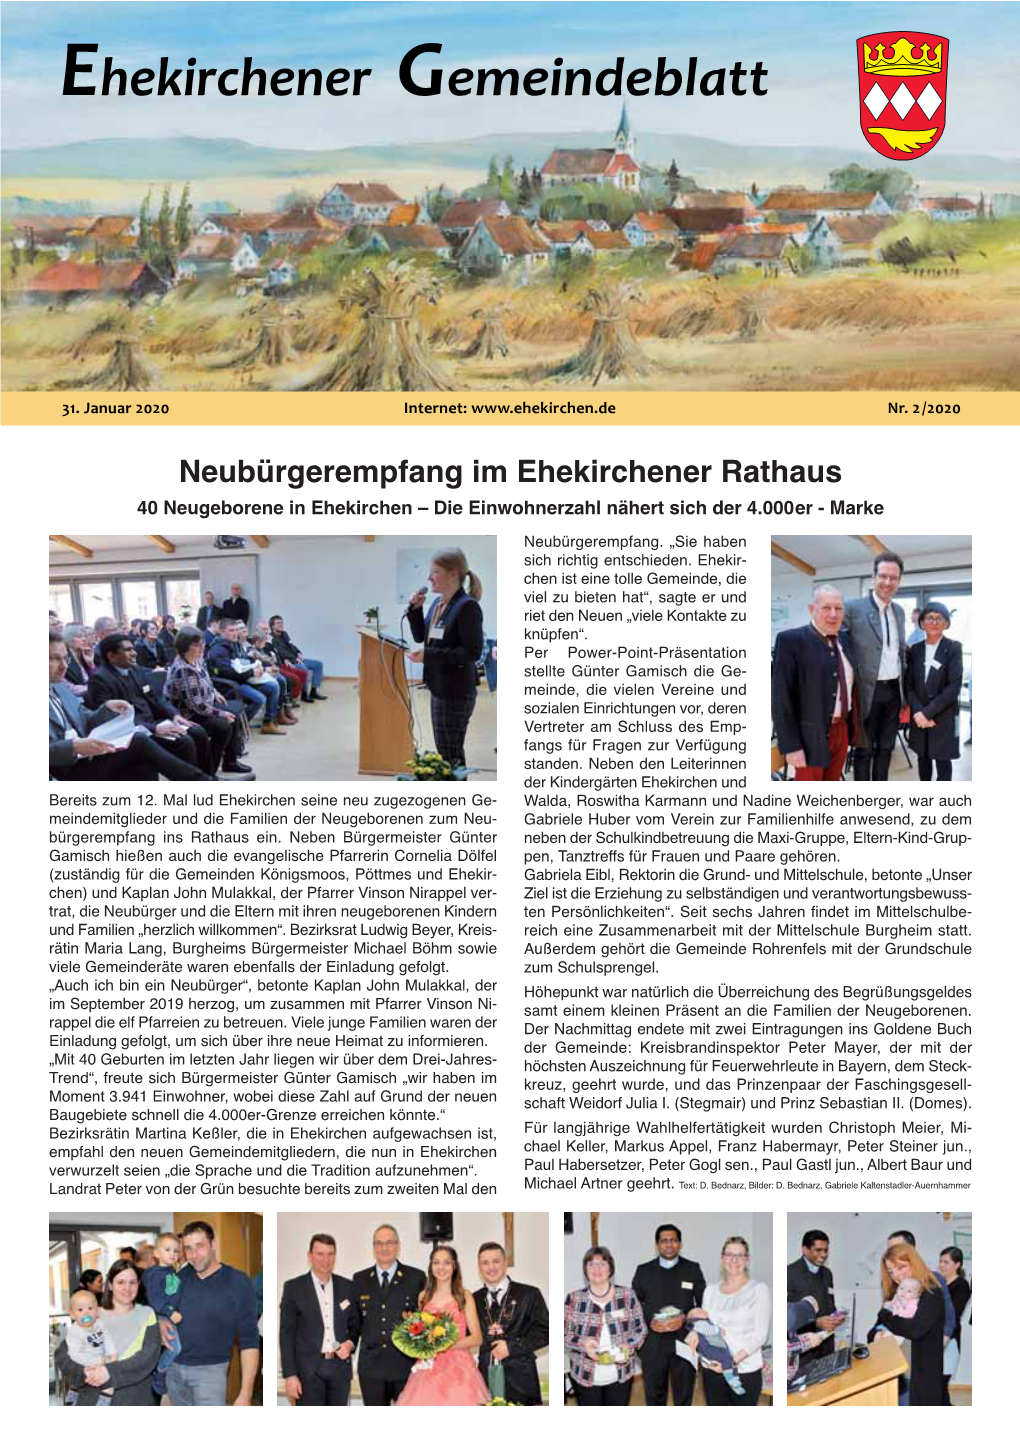 Ehekirchener Gemeindeblatt